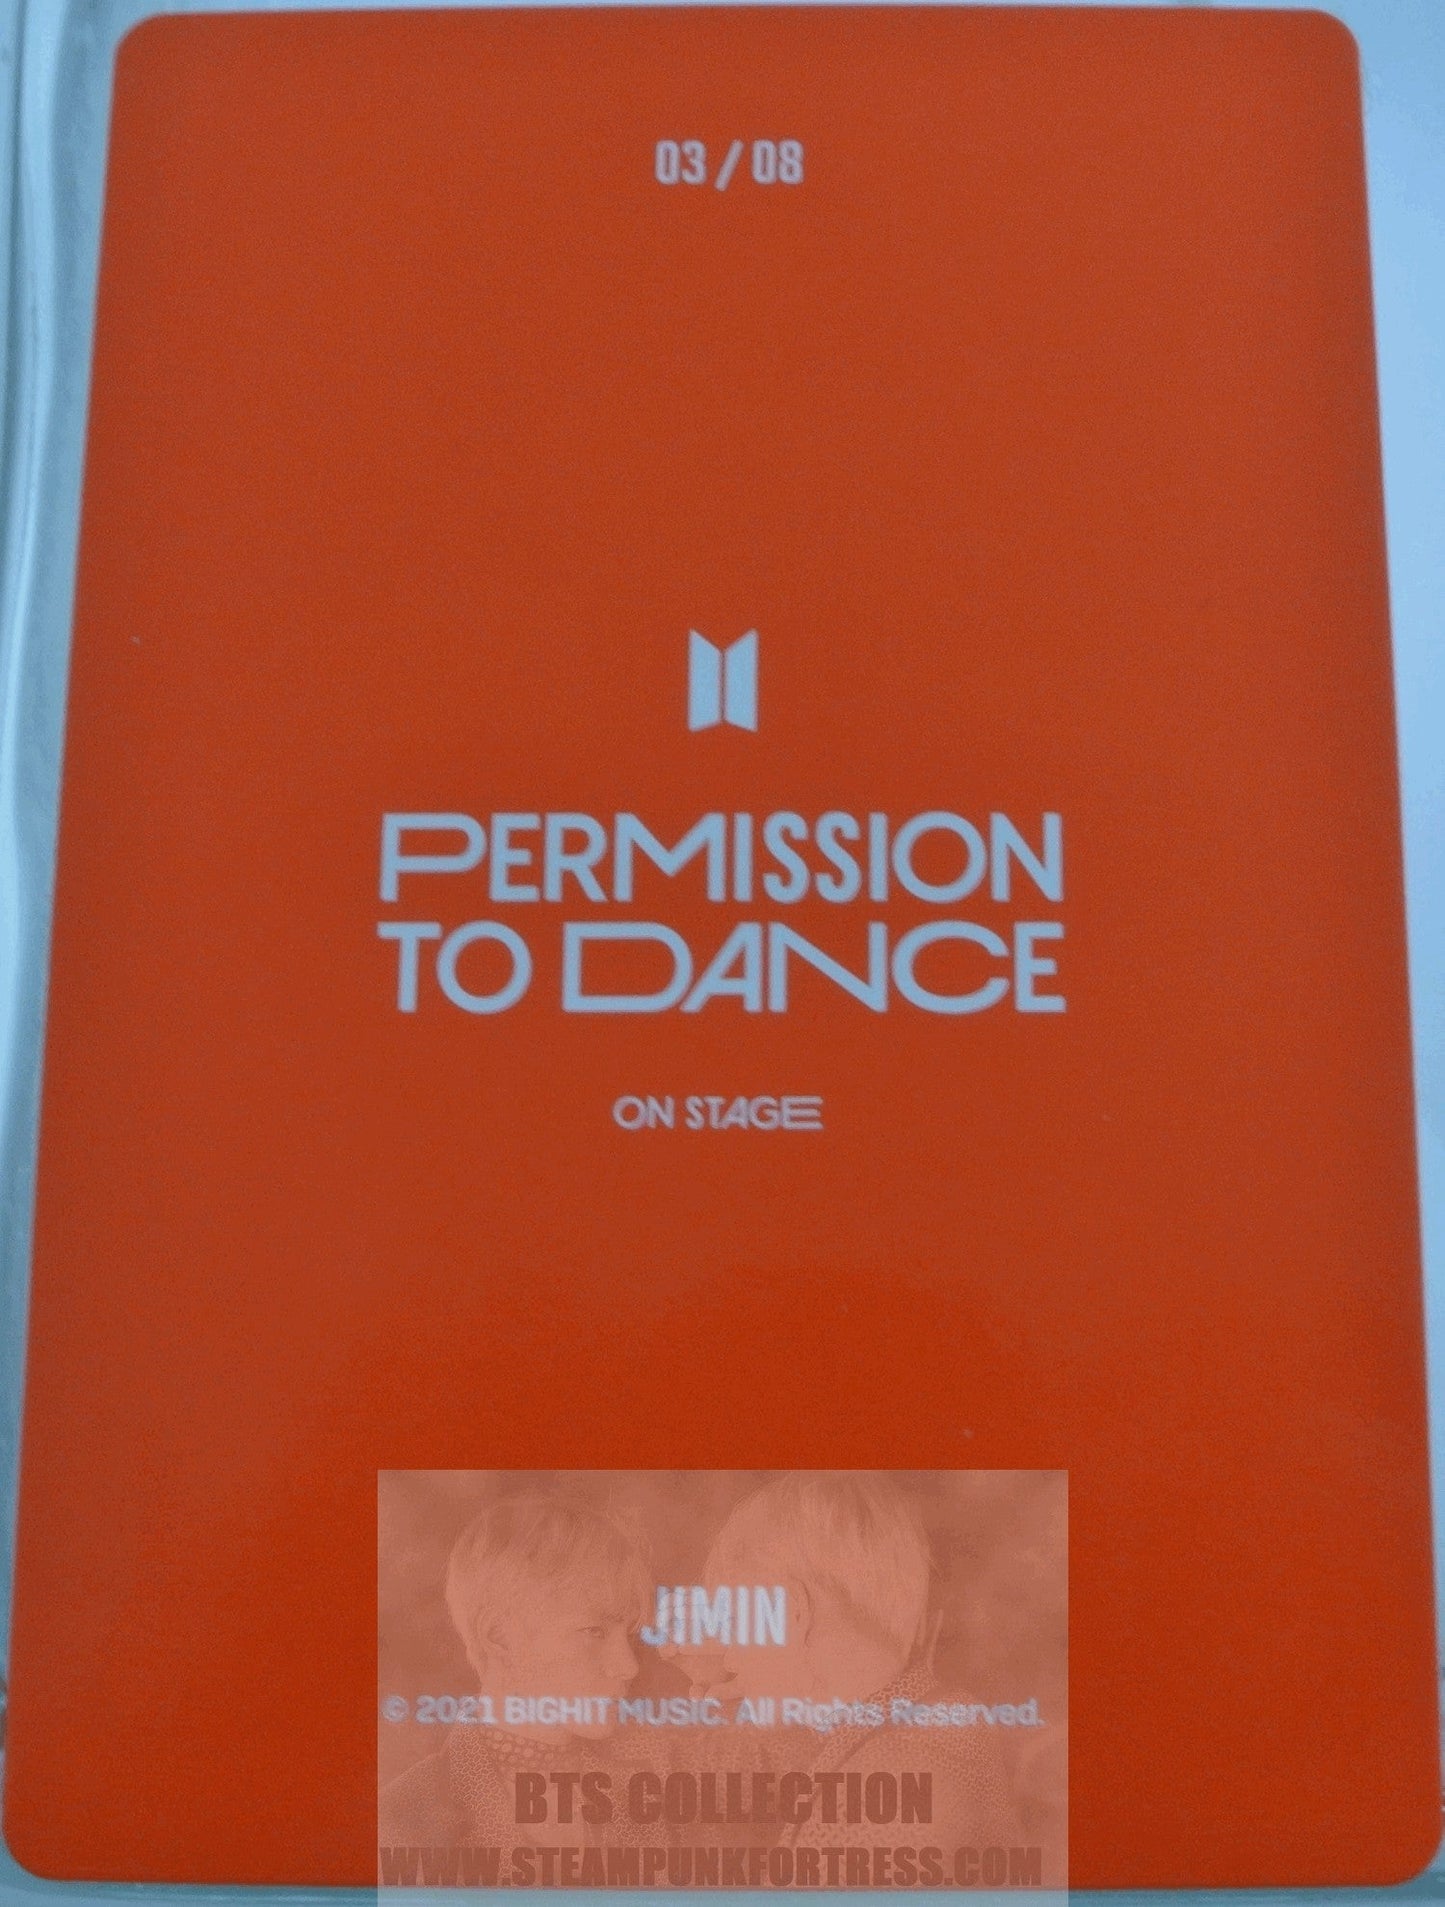 BTS JIMIN PARK JI-MIN 2021 PERMISSION TO DANCE PTD #3 OF 8 PHOTOCARD PHOTO CARD NEW OFFICIAL MERCHANDISE